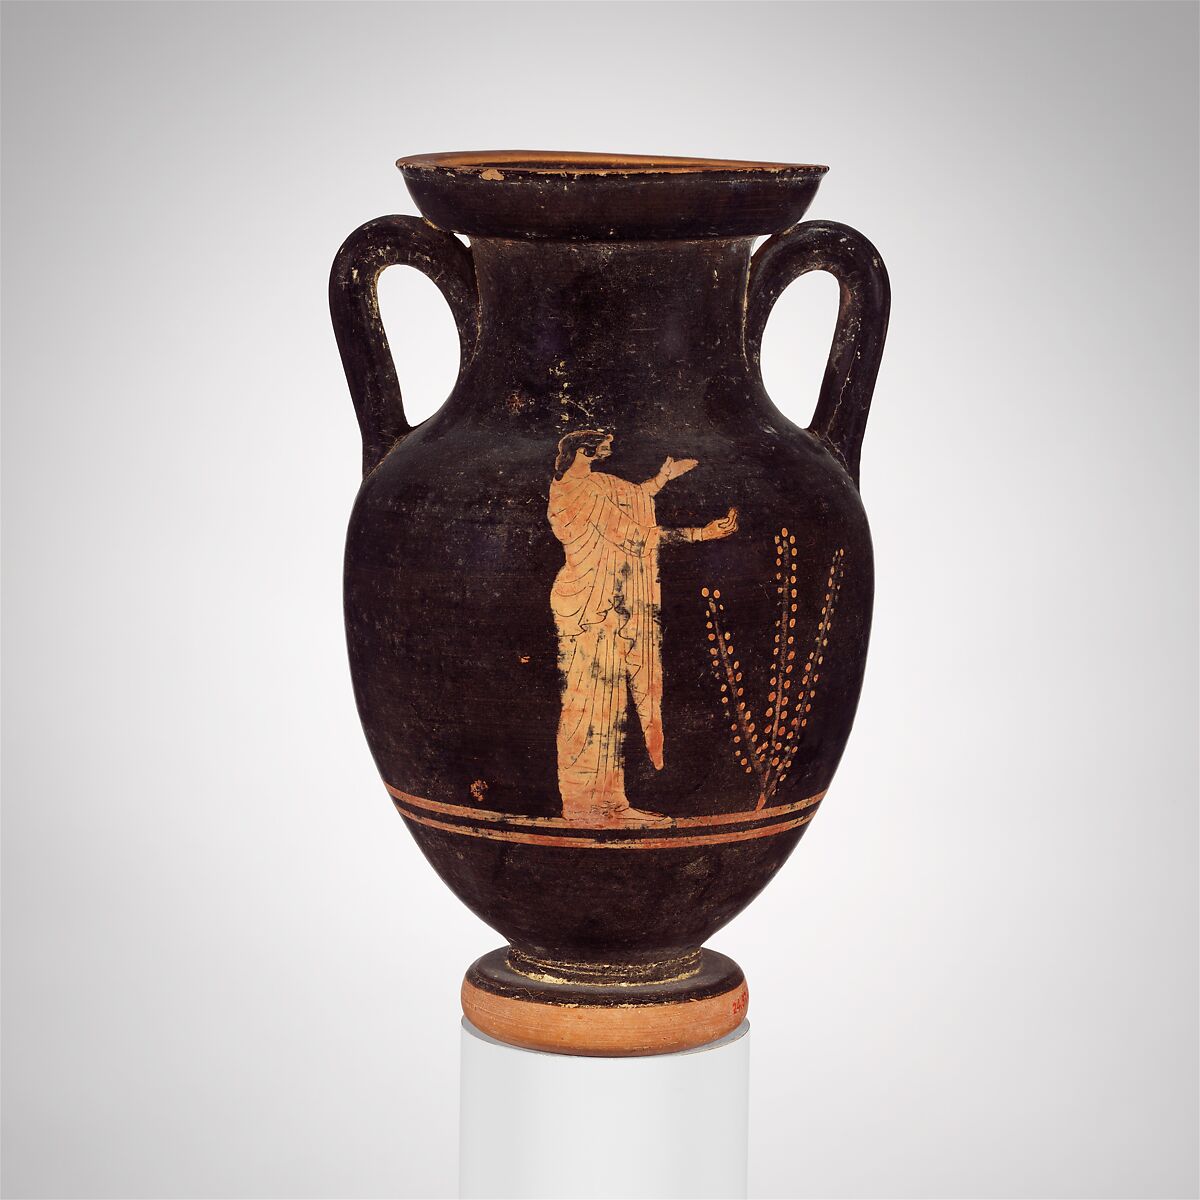 Terracotta amphora (jar), Pose attributed to Praxias Group, Terracotta, Etruscan 